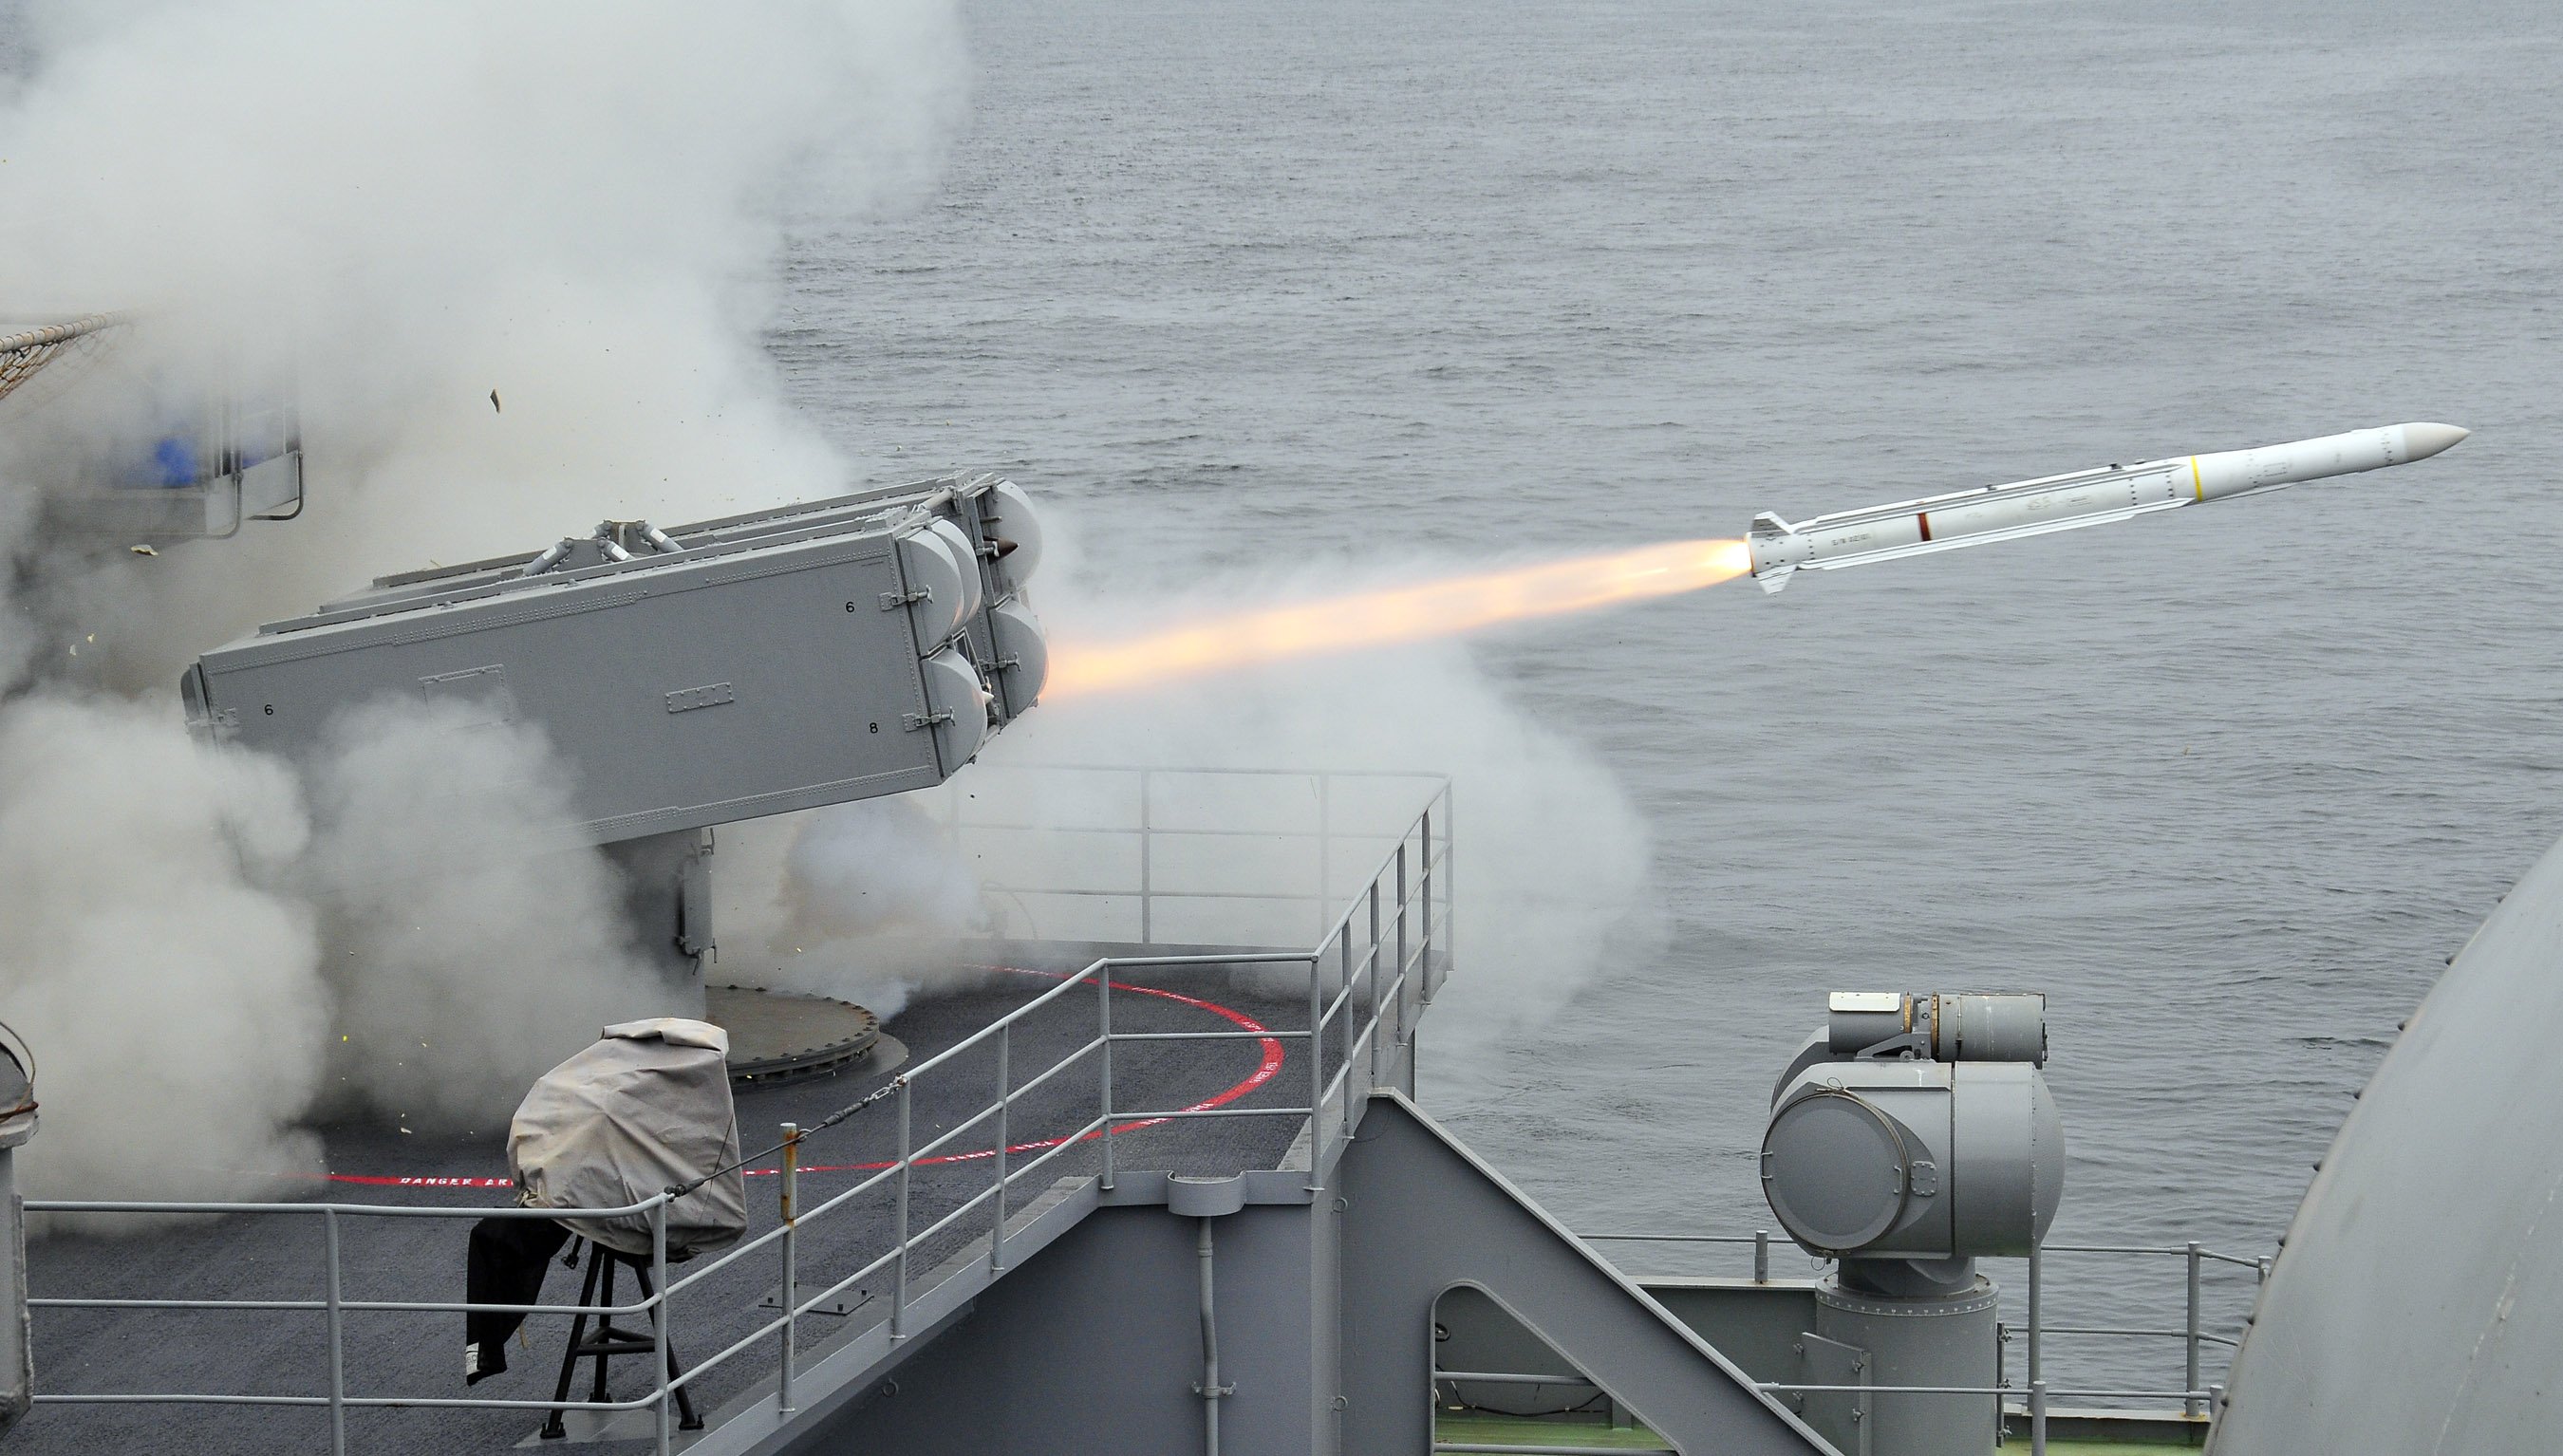 Evolved Sea Sparrow Missile (ESSM) Block 2 Anti-Air Missile